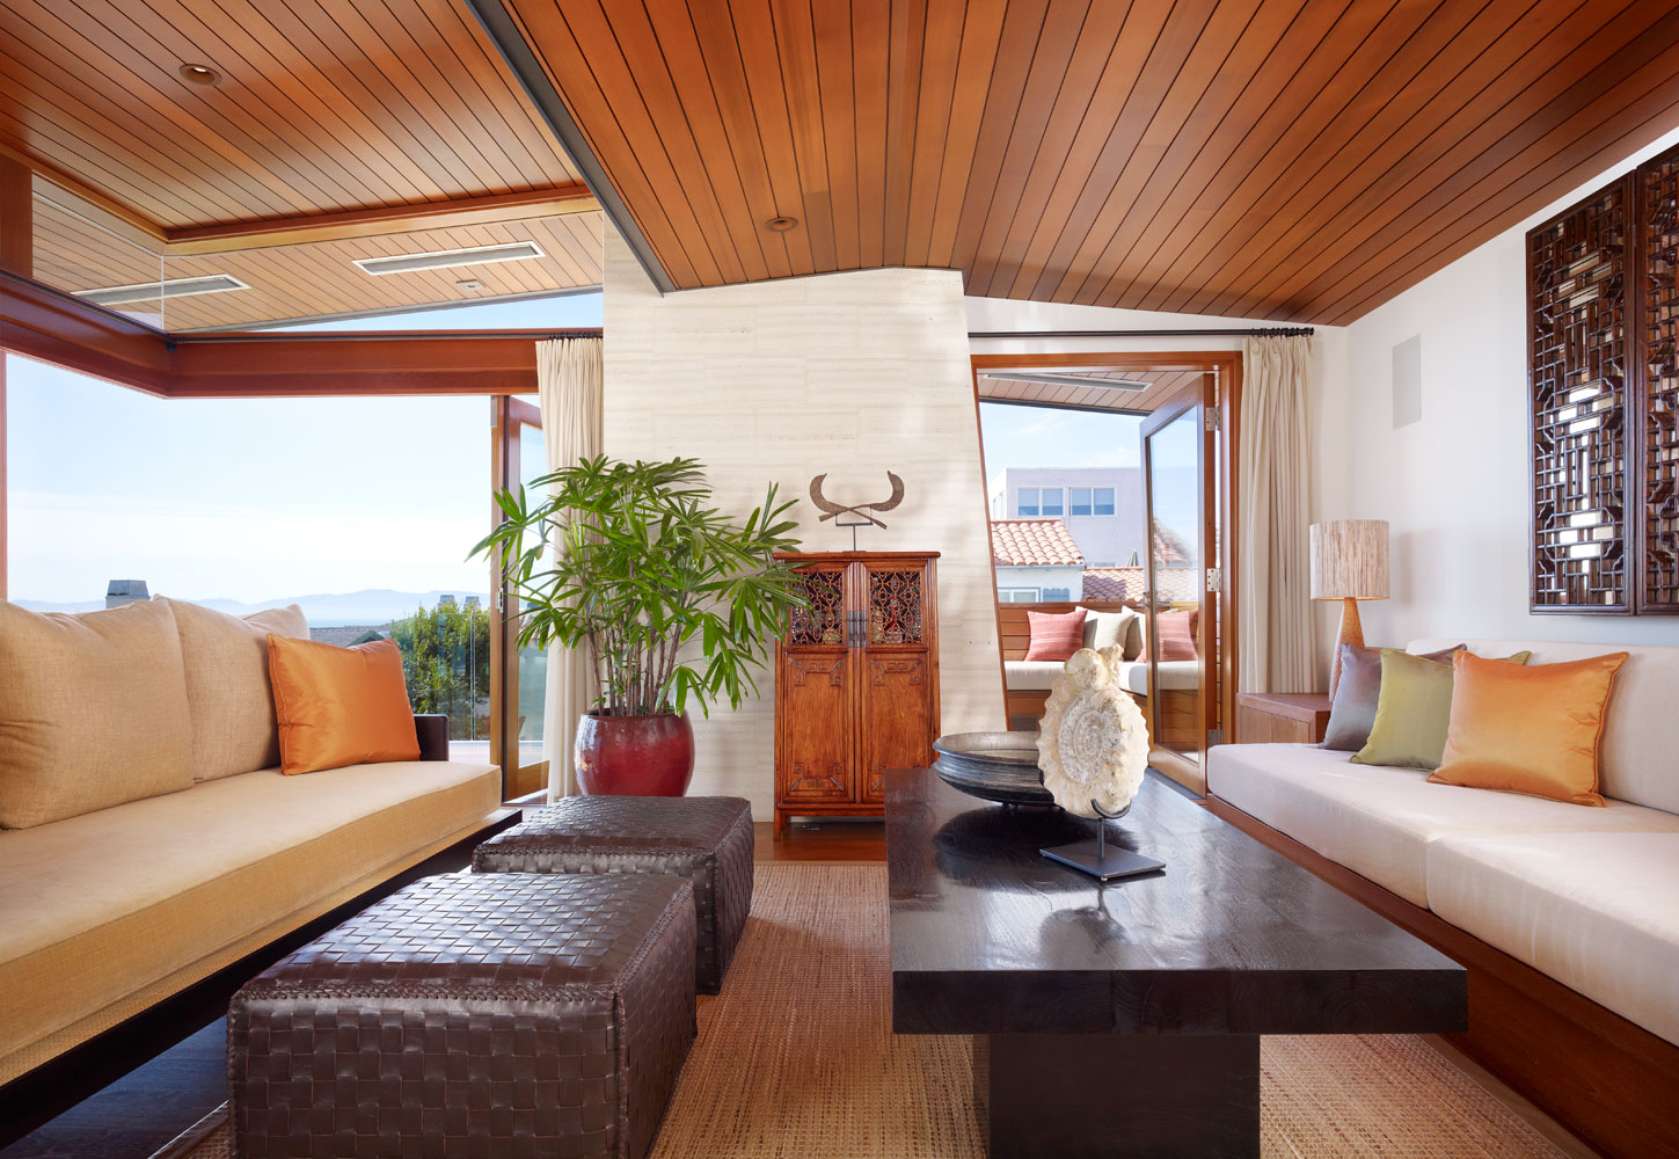 Top 15 Best Wooden Ceiling Design Ideas - Small Design Ideas